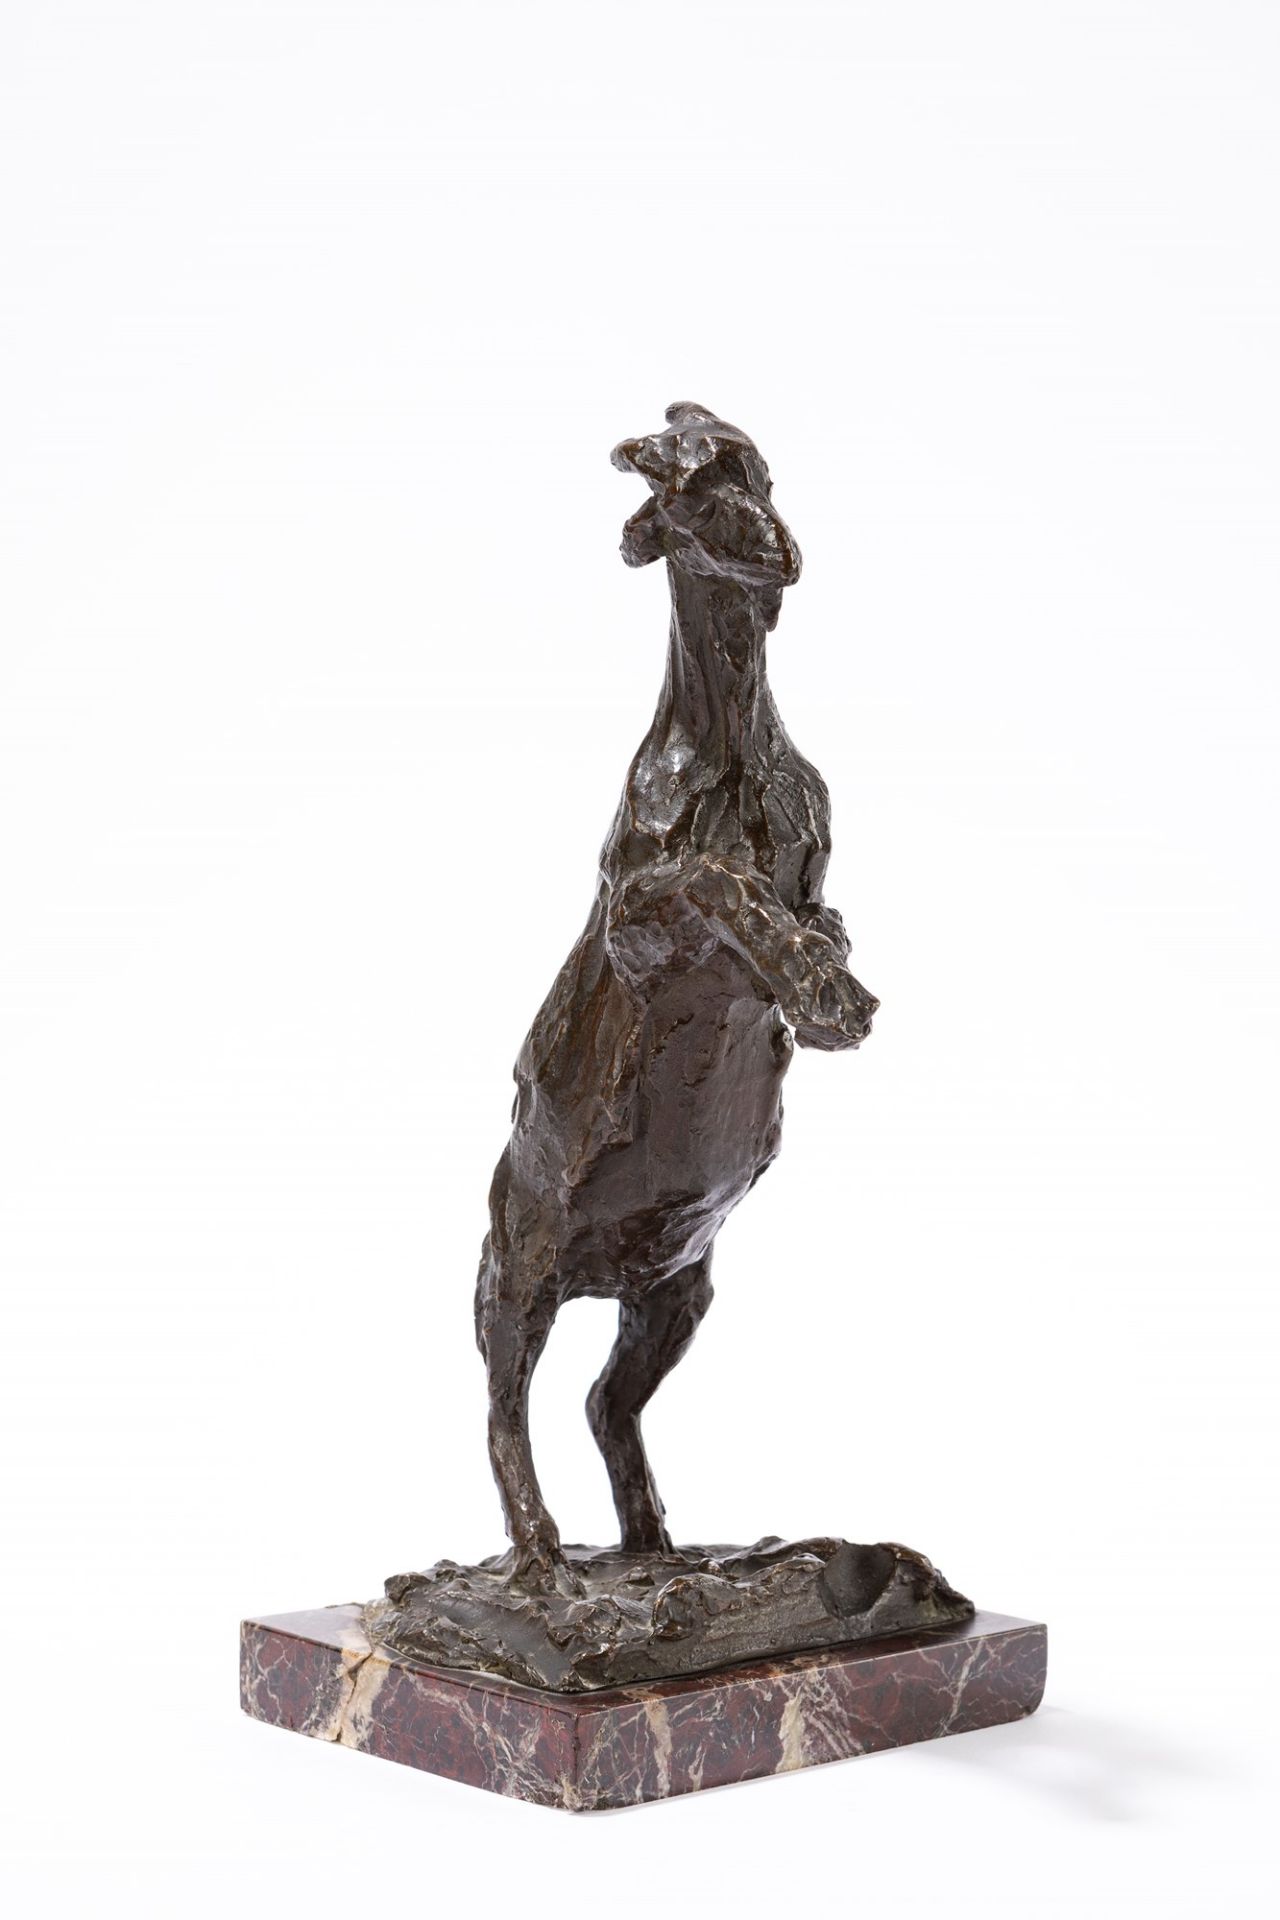 Pietro Cendali (Milano 1893-?) - The goat, 1939